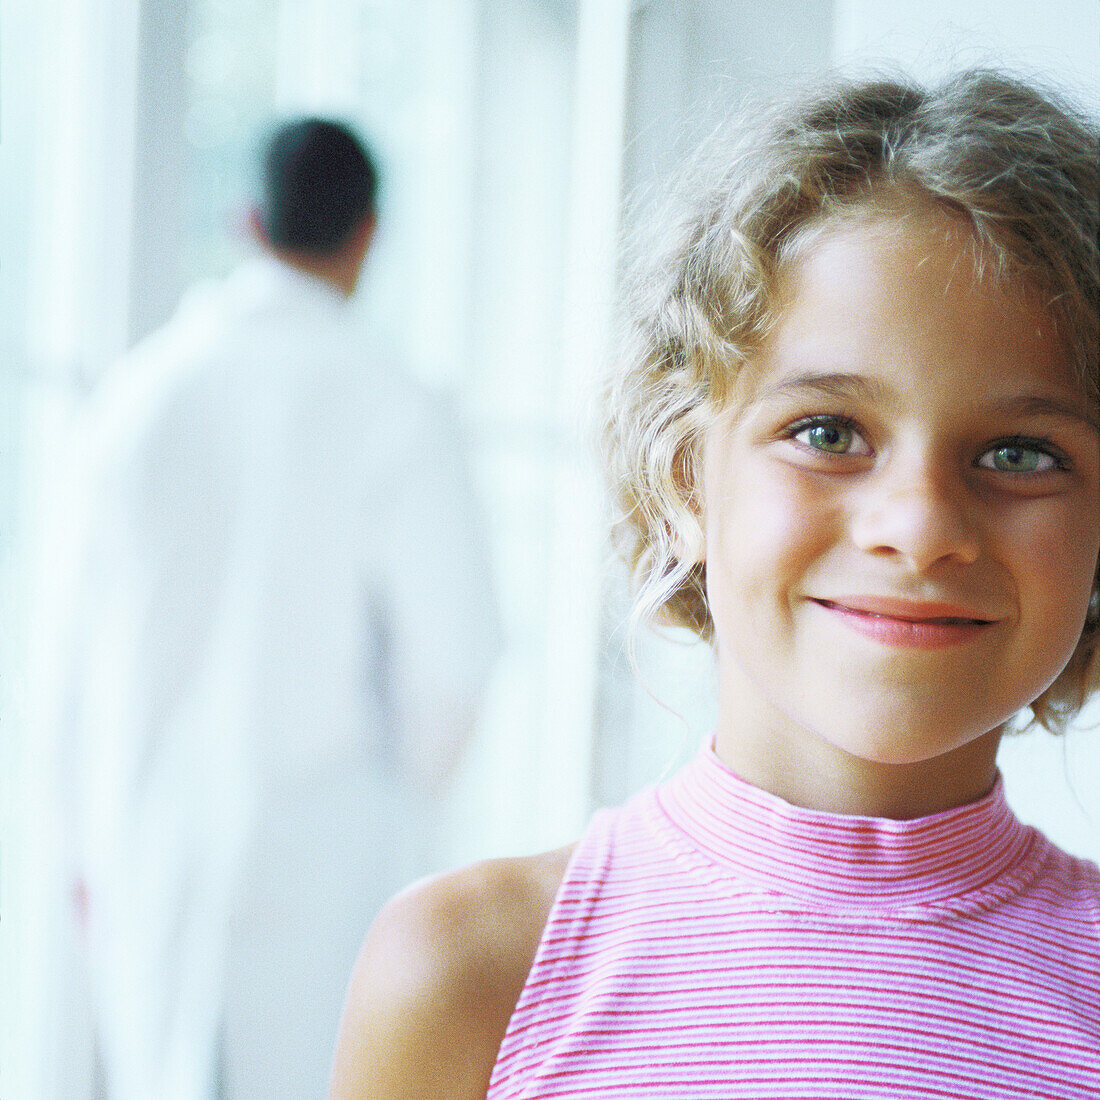 Girl smiling, doctor walking away in background